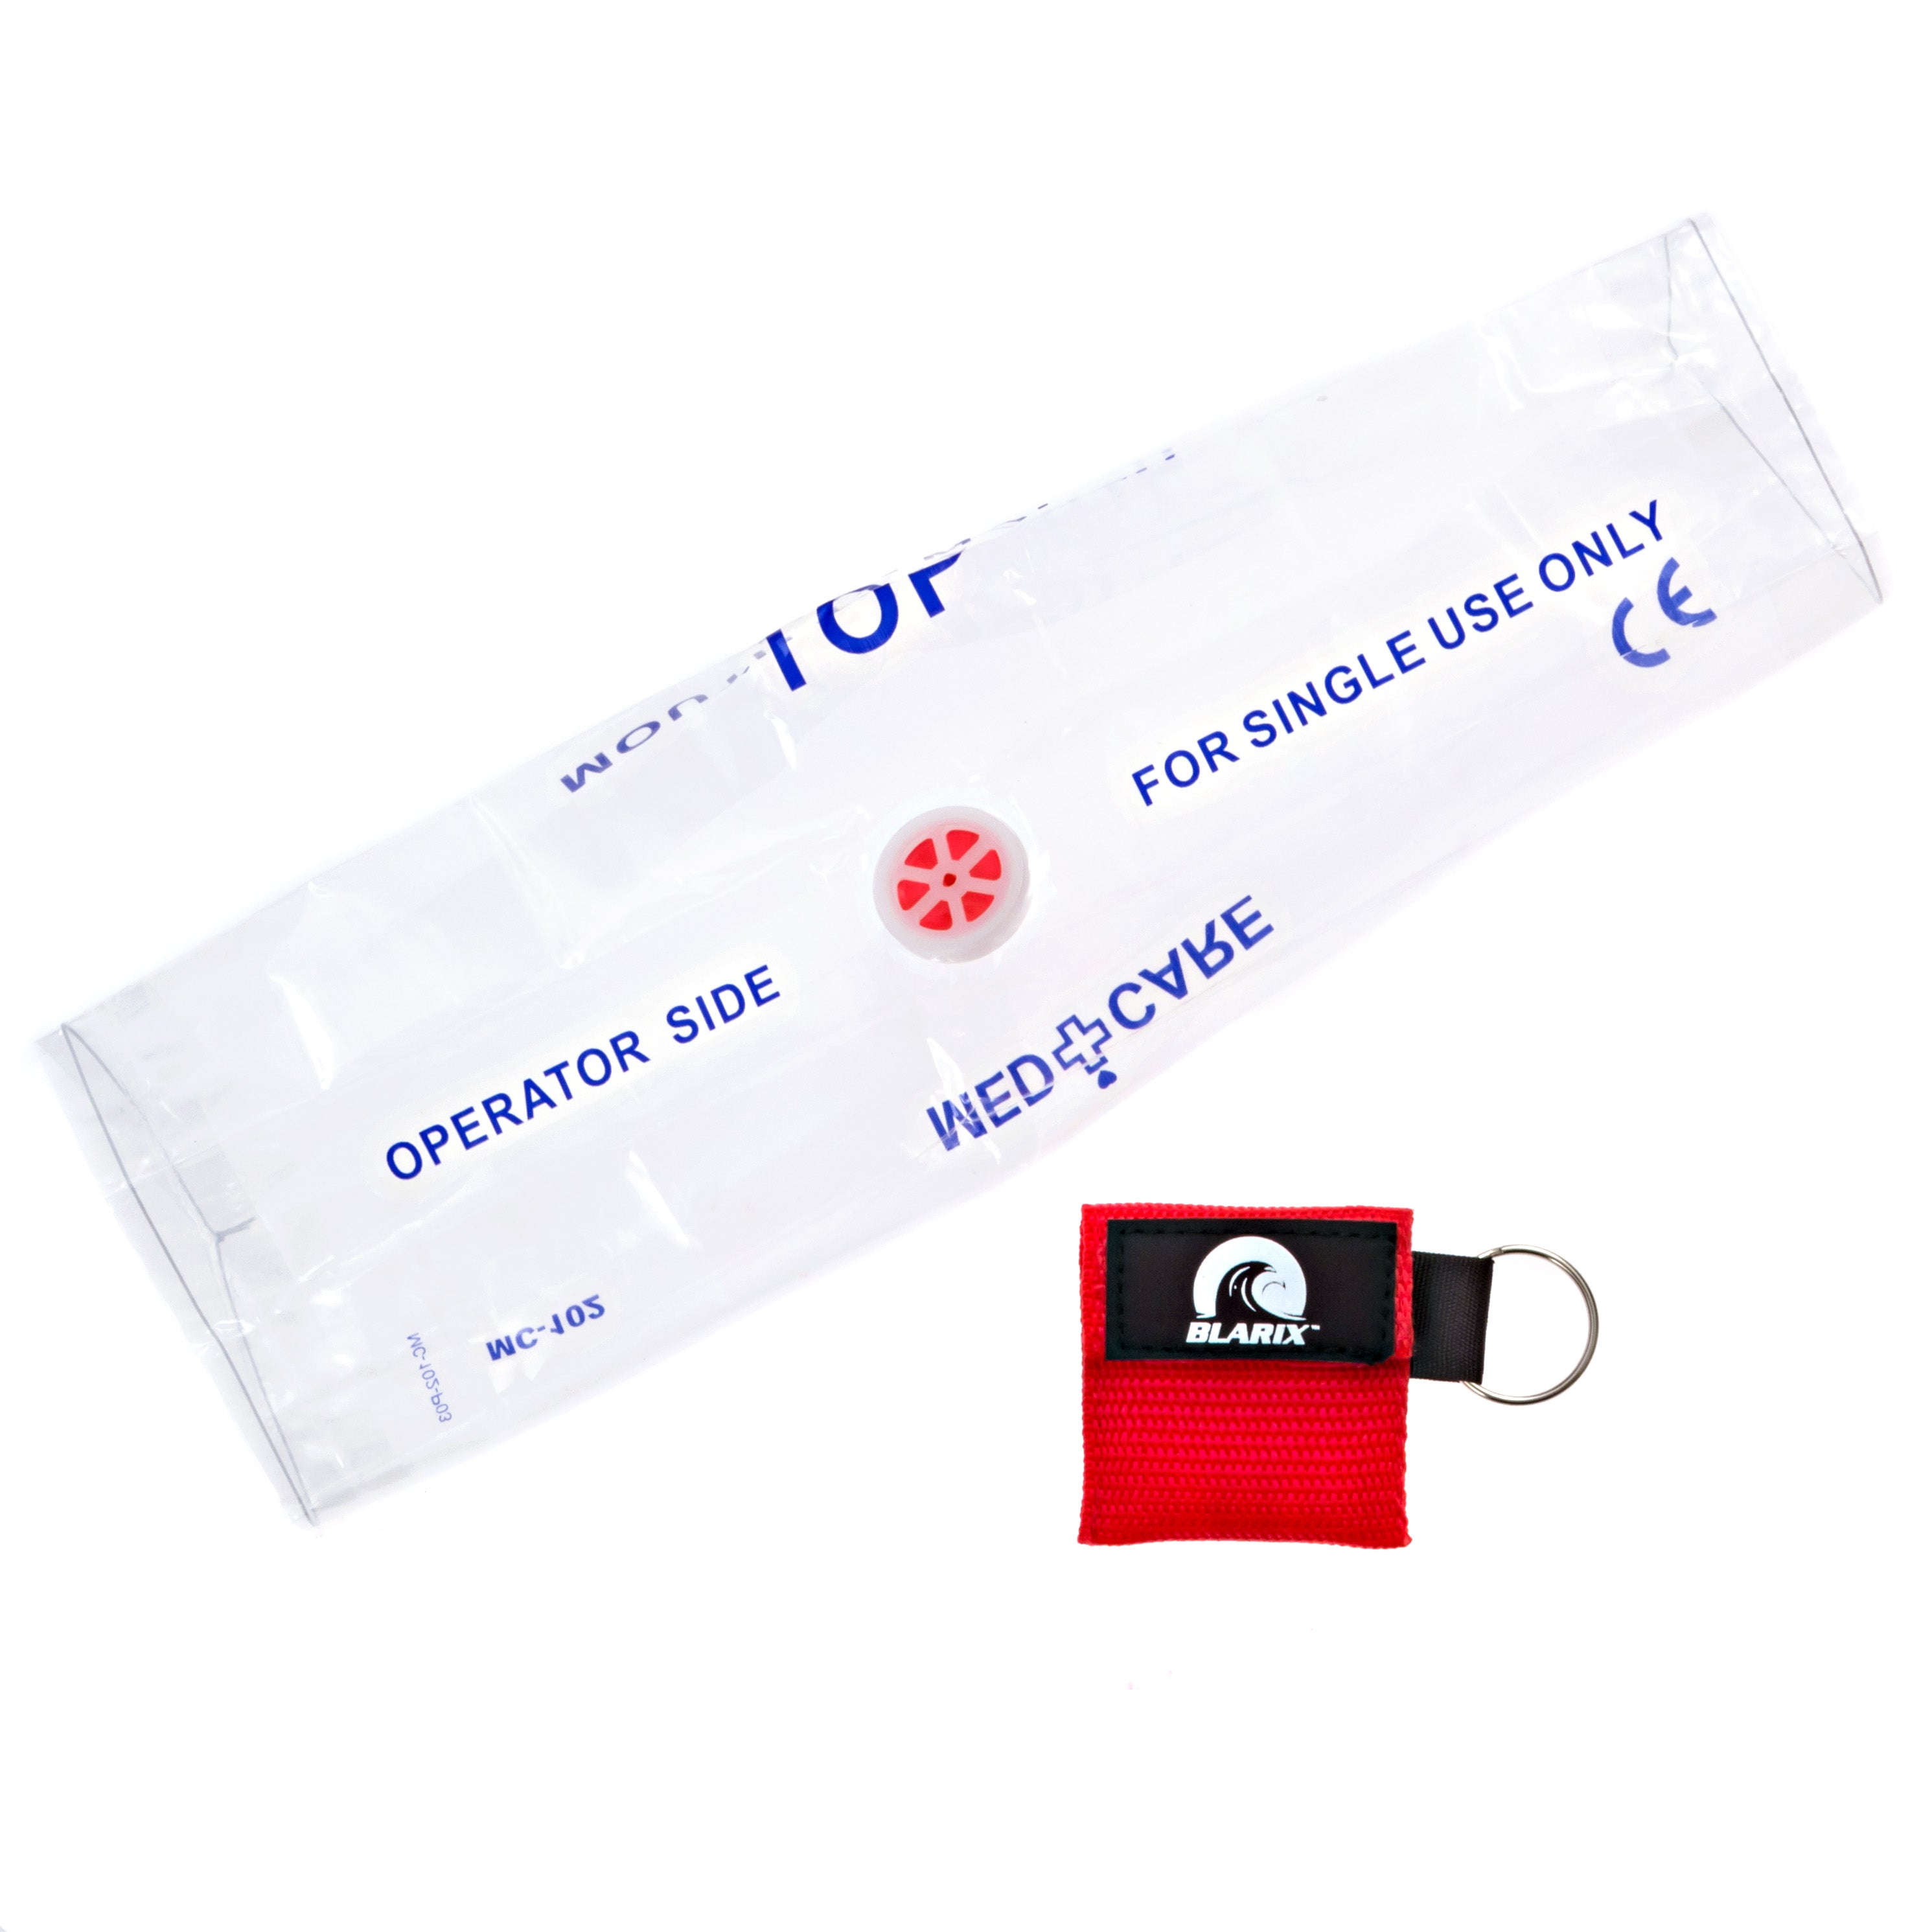 Lifeguard CPR Mask Keychain - BLARIX